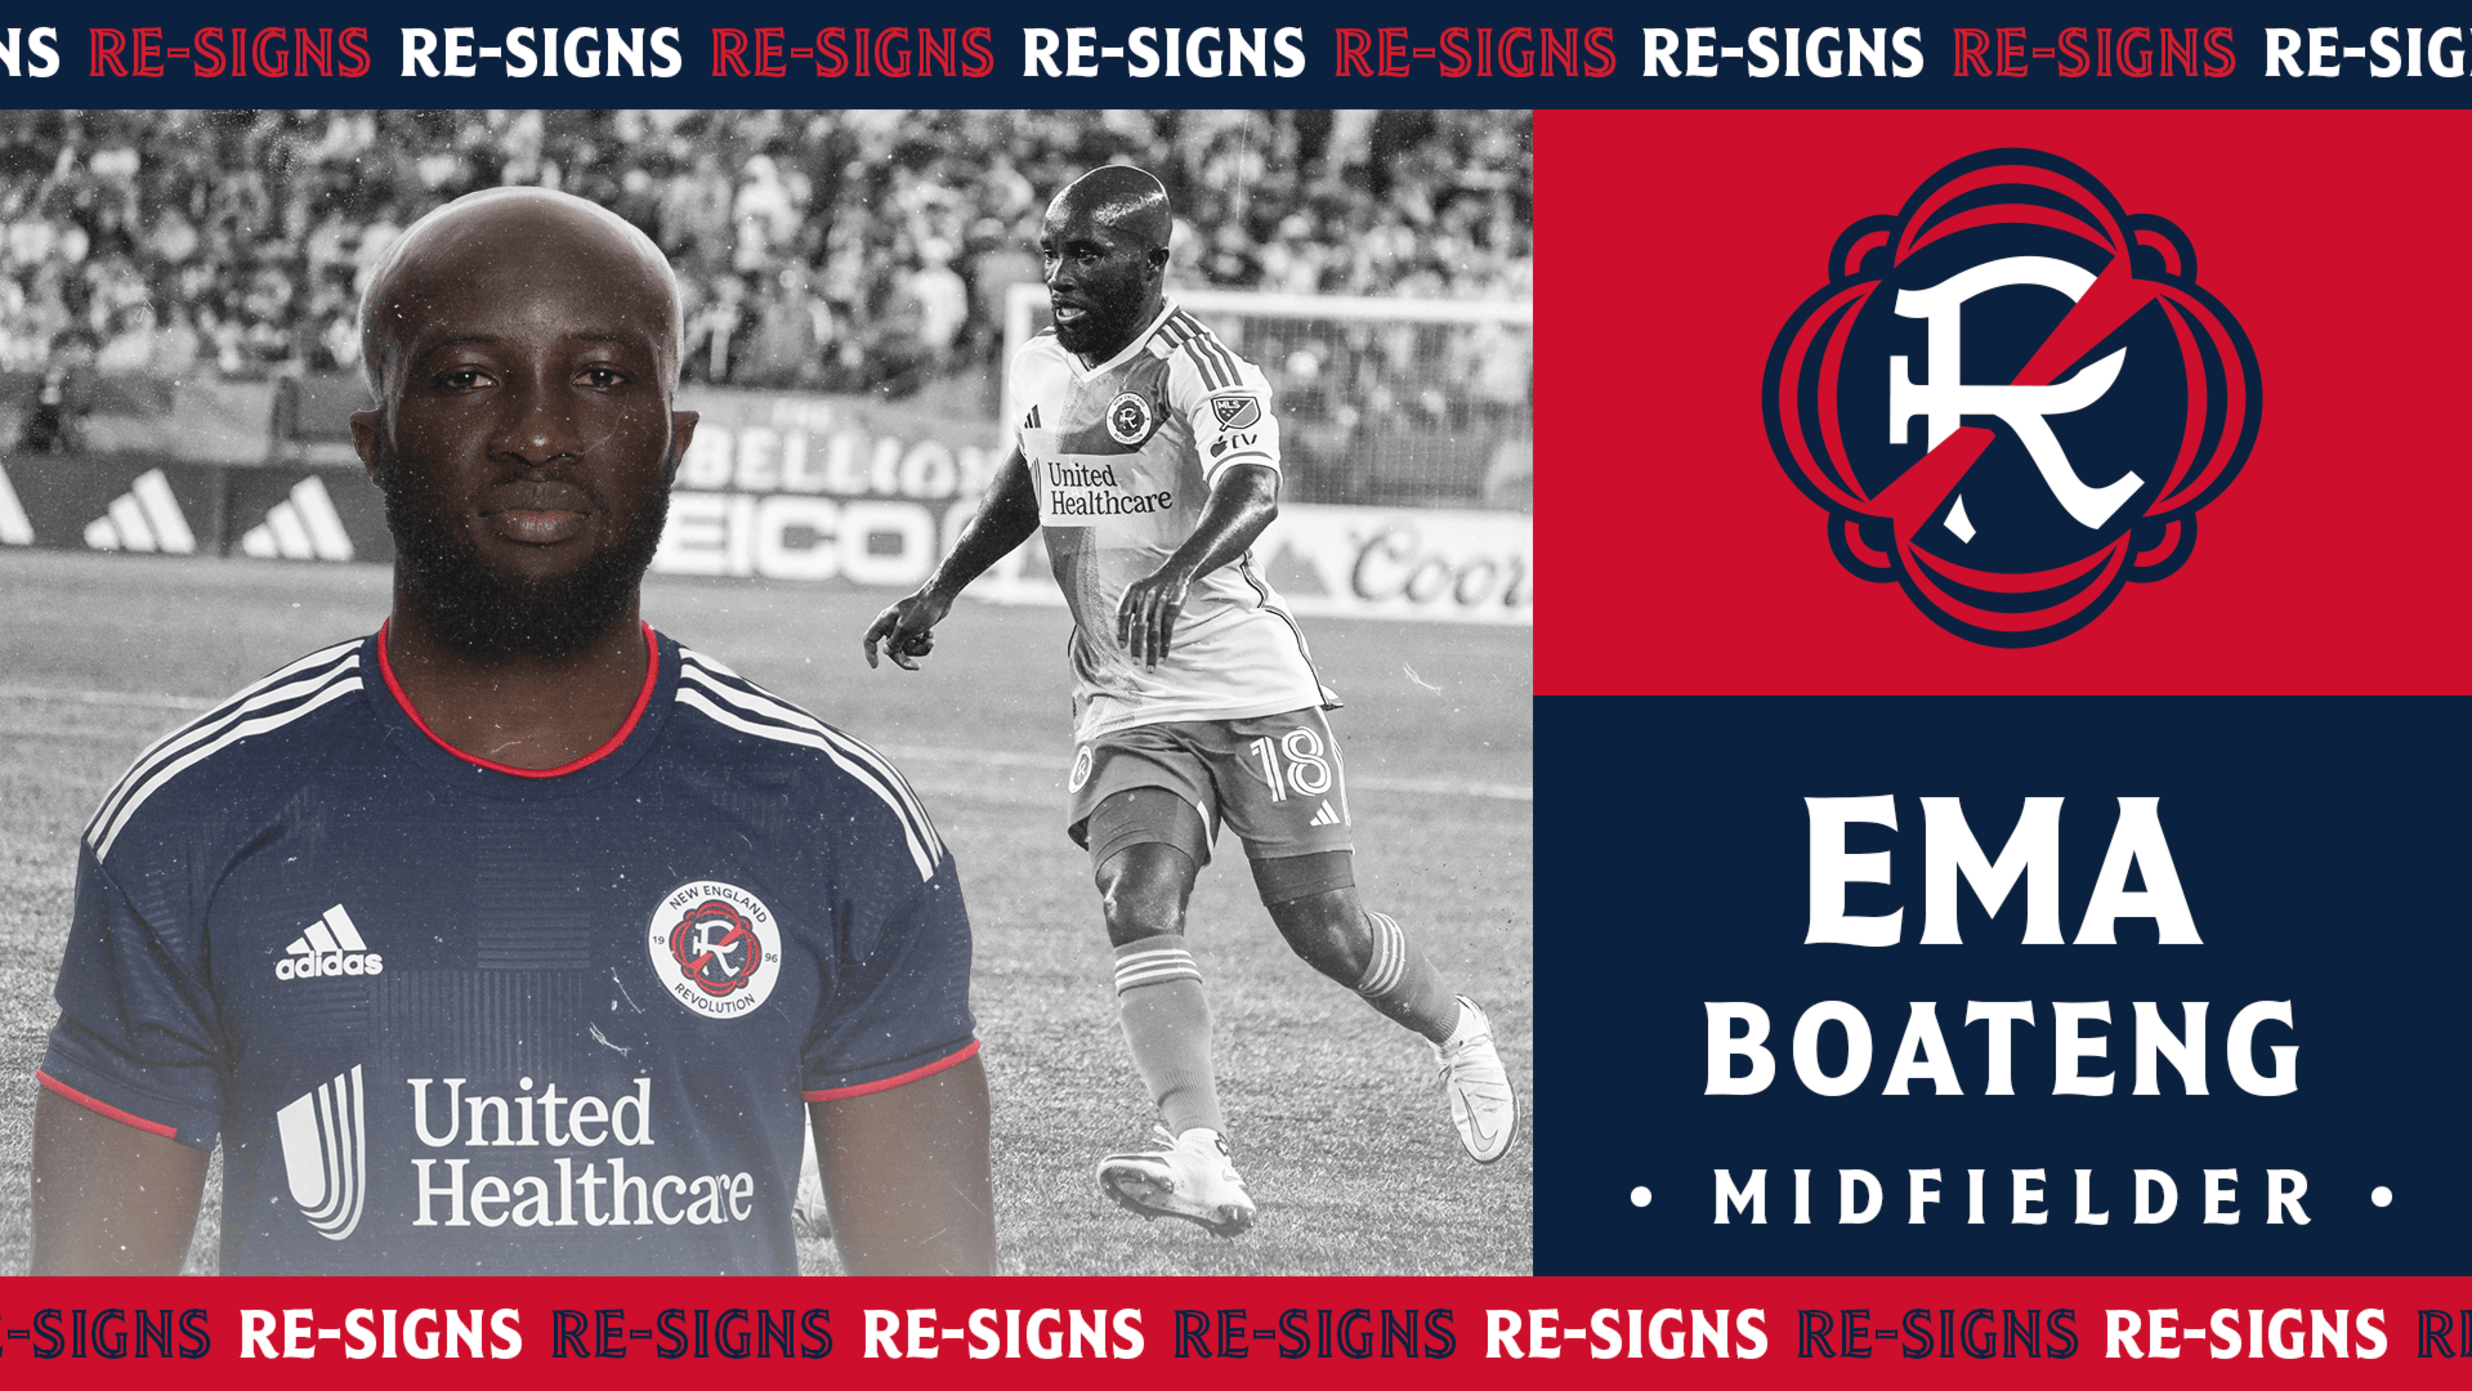 MLS side New England Revolution re-sign Ghana’s Emmanuel Boateng